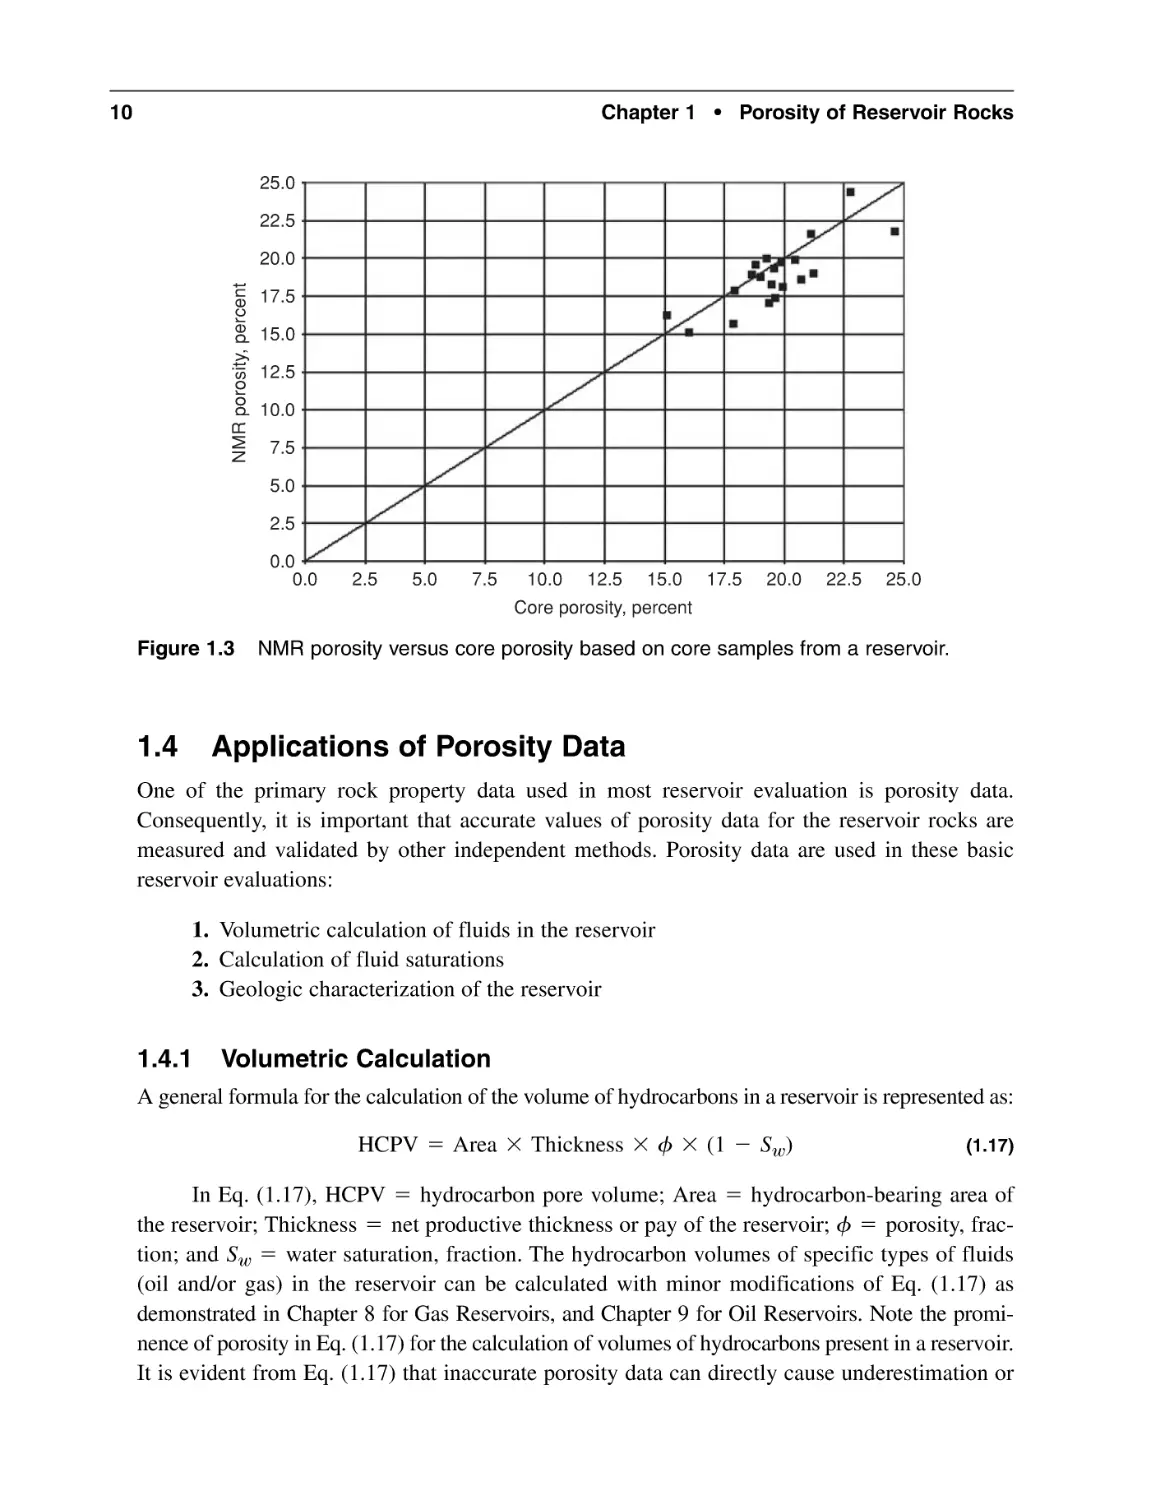 1.4 Applications of Porosity Data
1.4.1 Volumetric Calculation